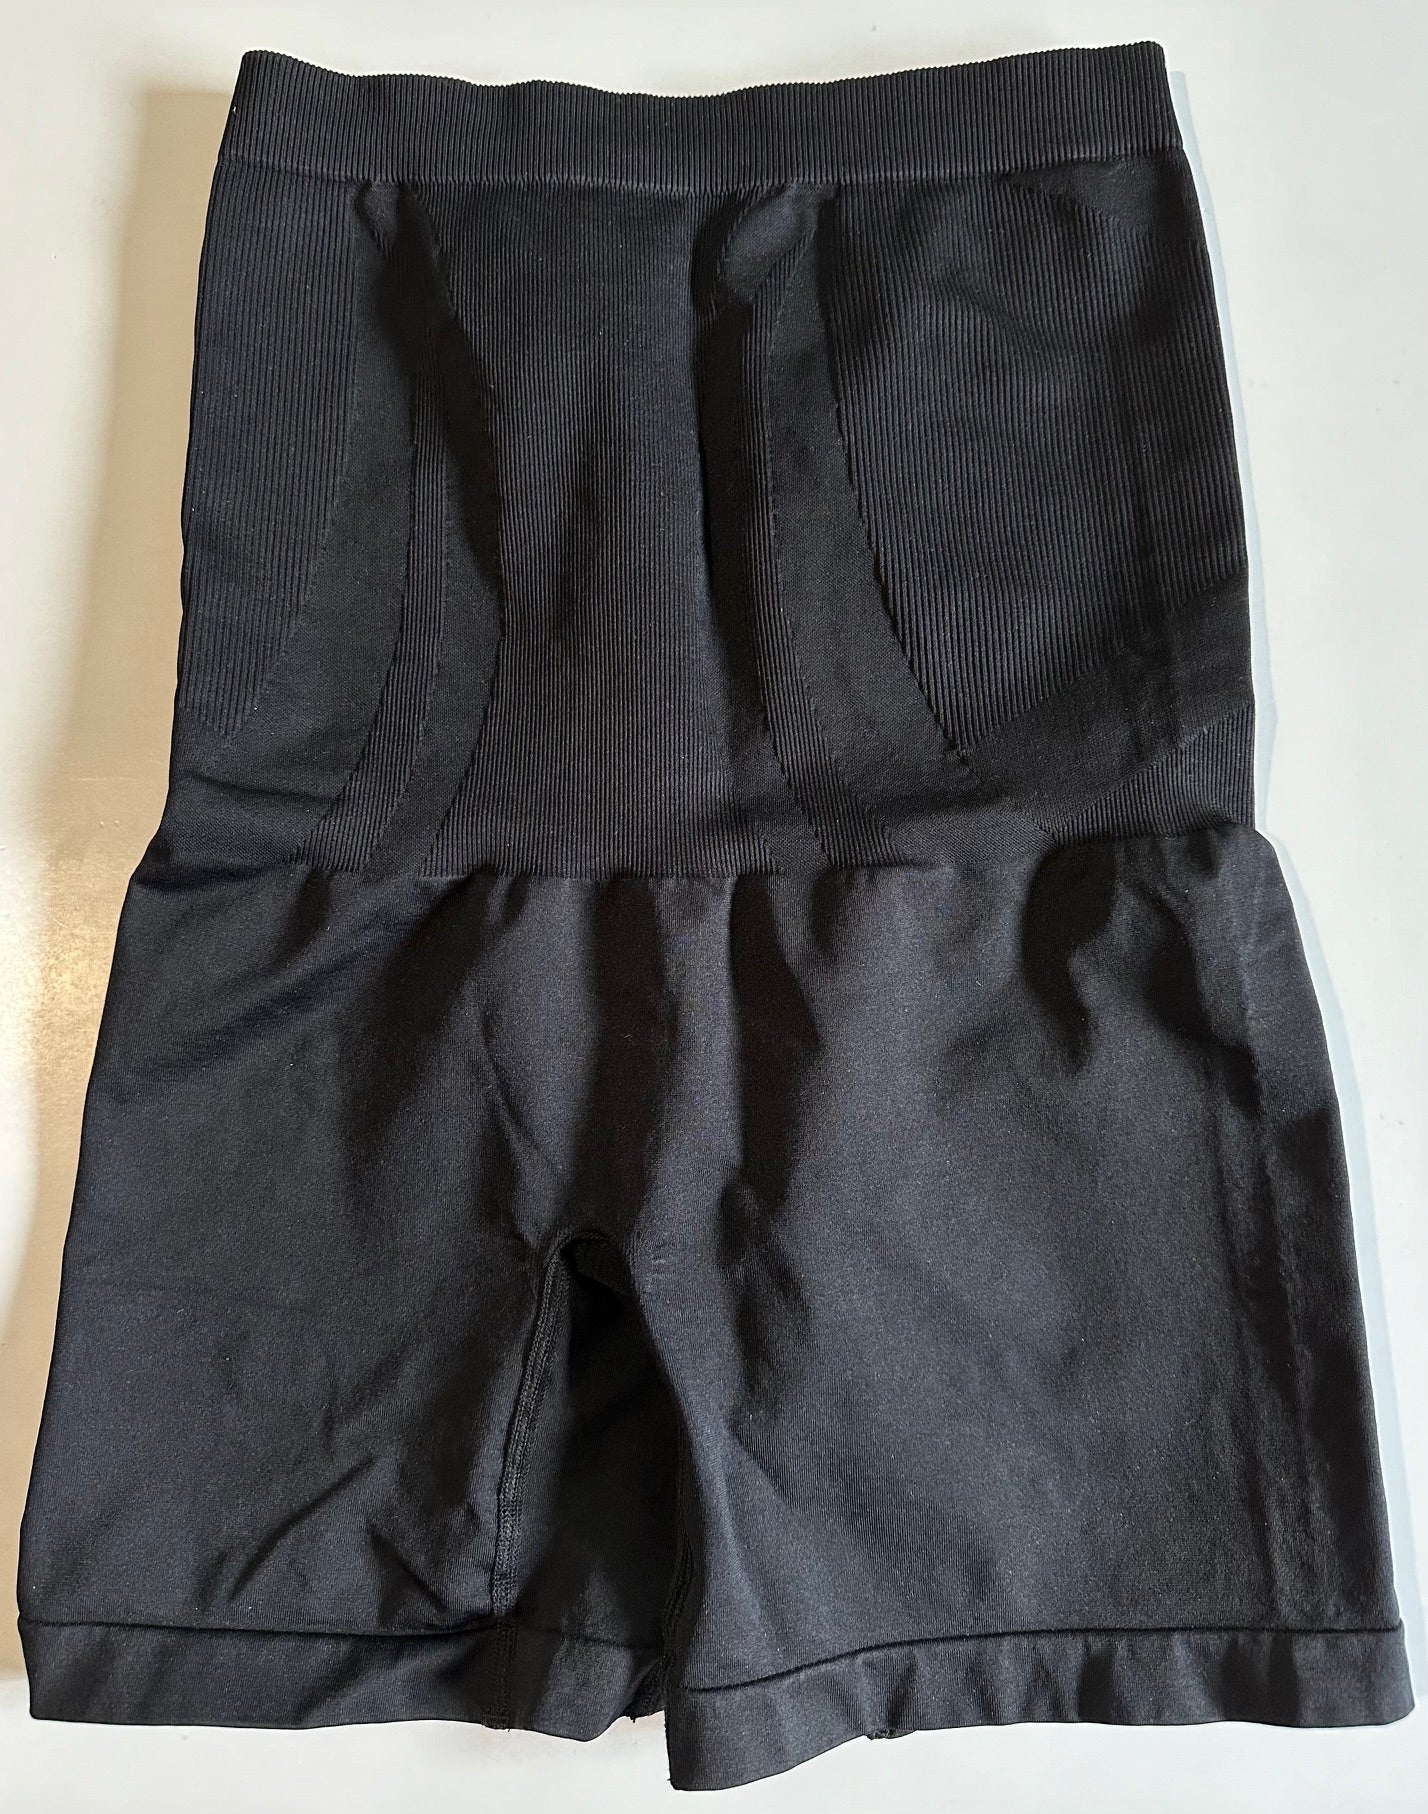 Blanqi, Black Postpartum Shorts - Size Medium